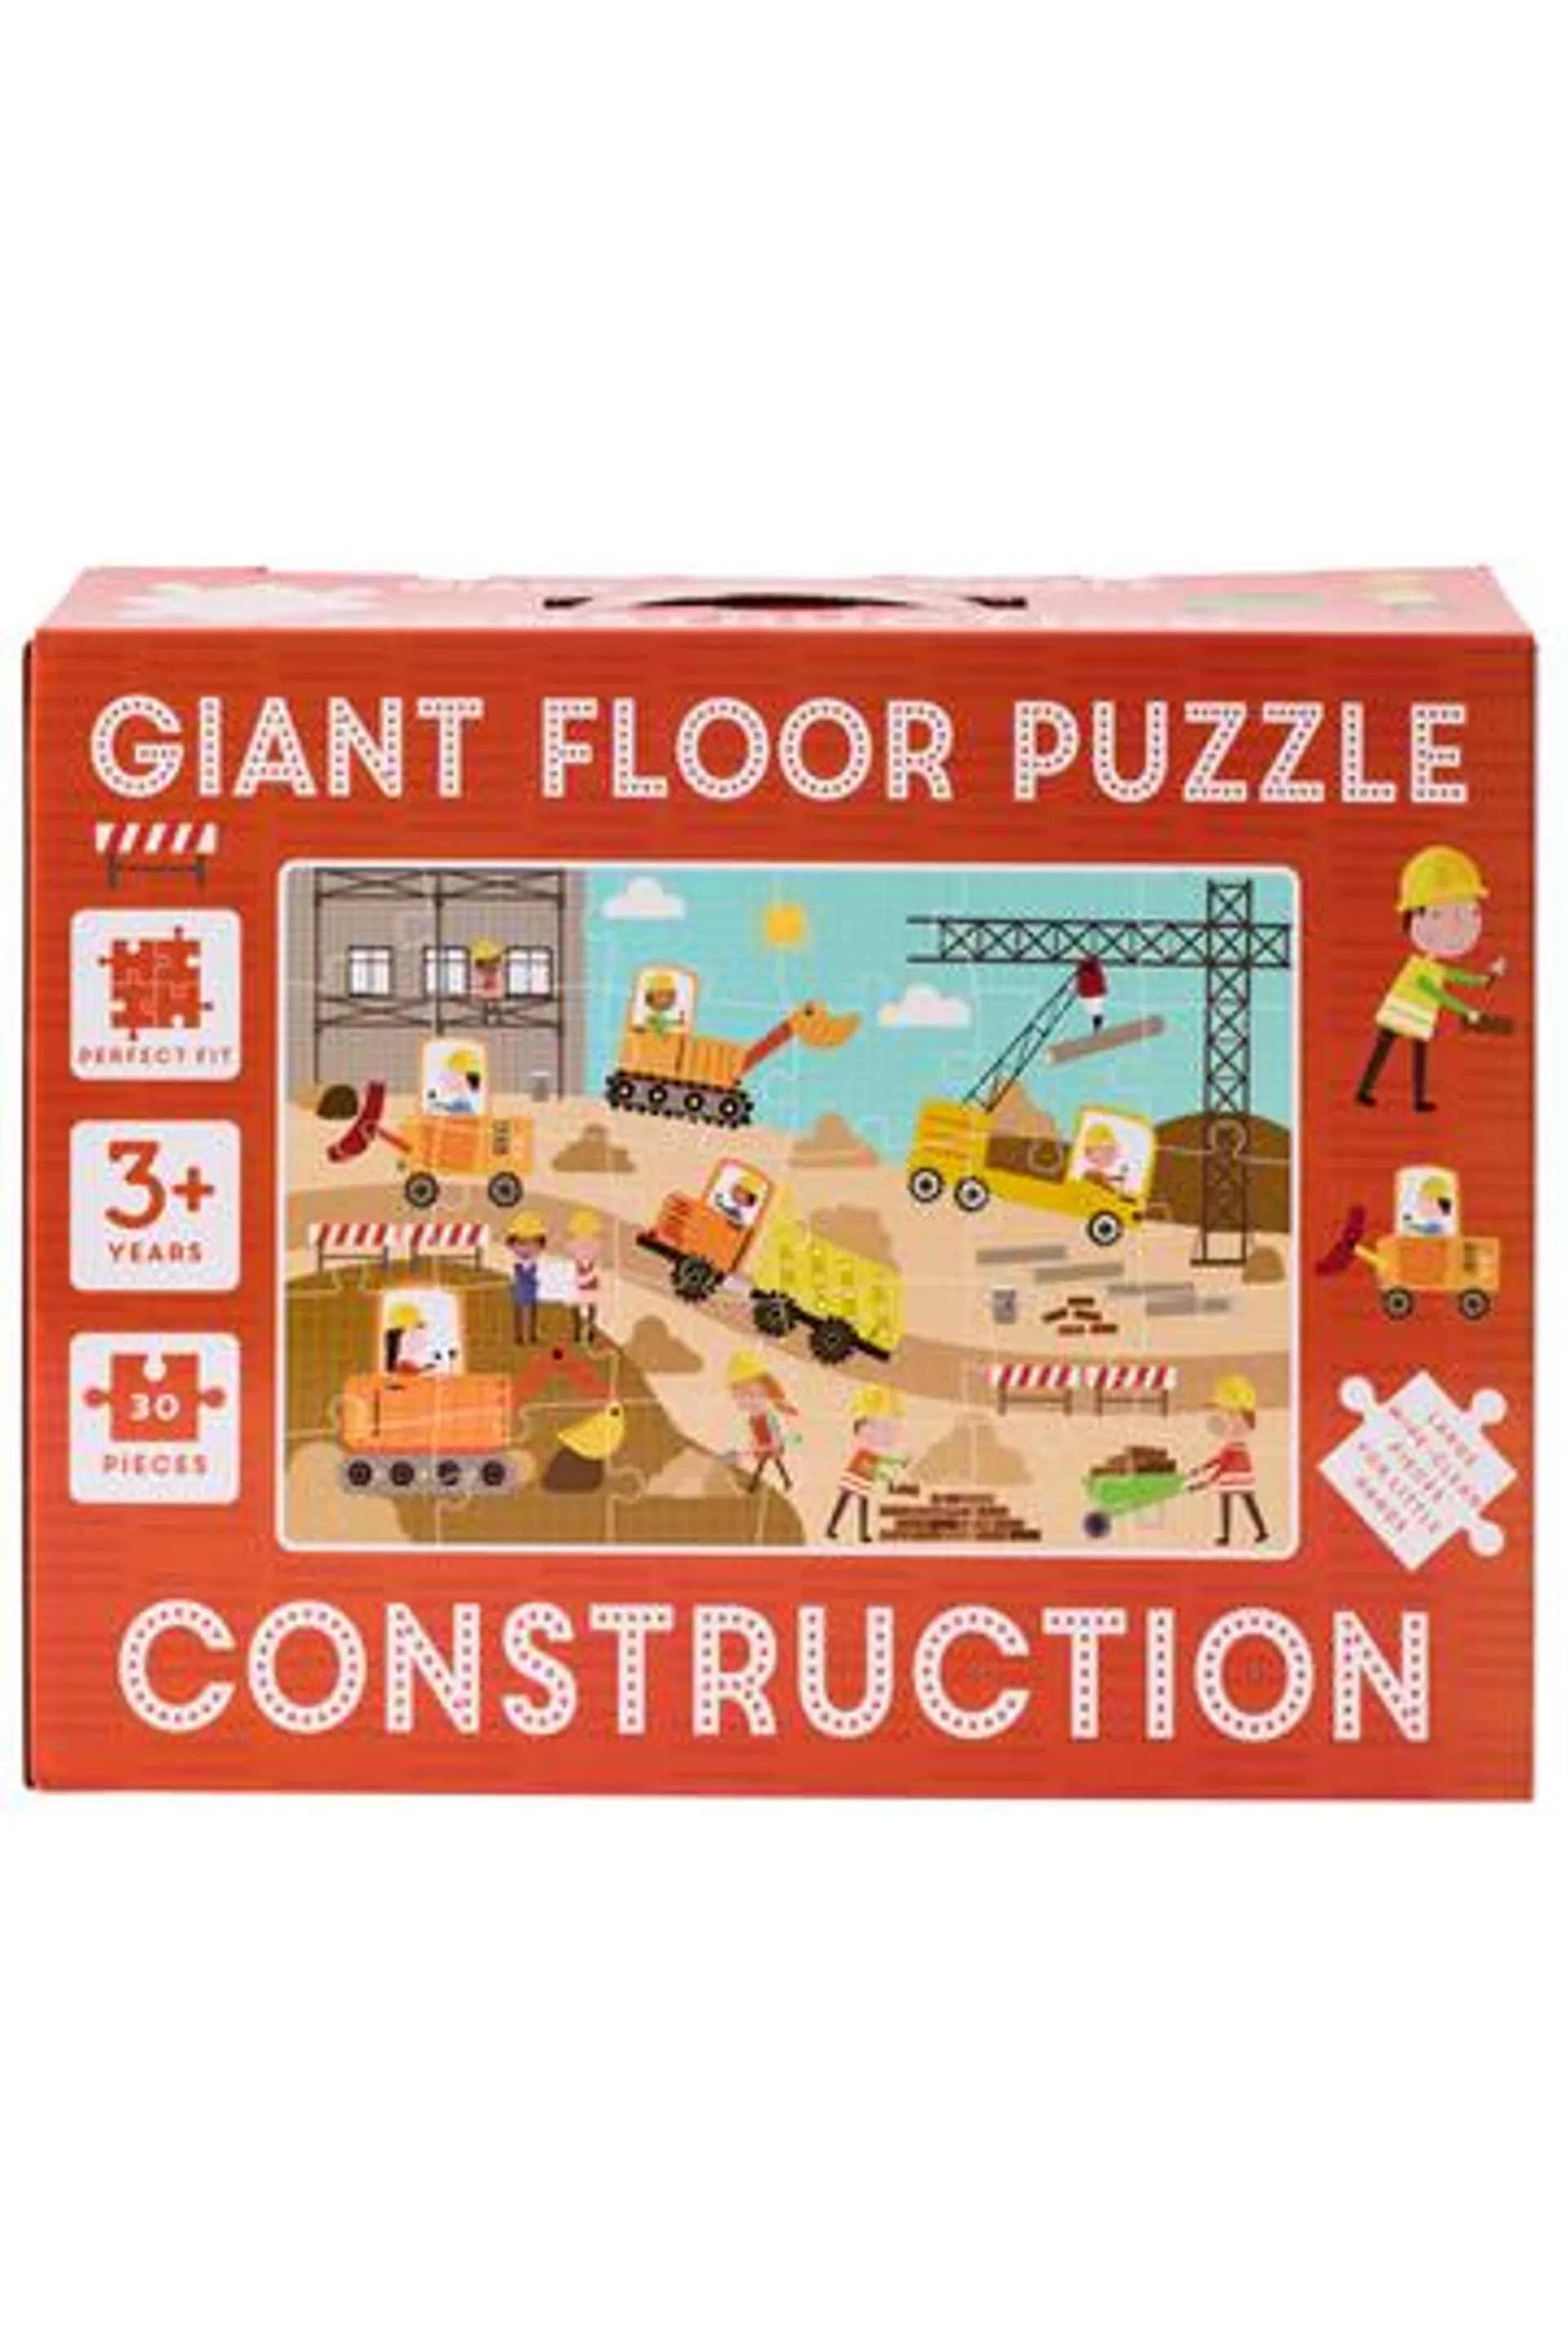 Giant Floor Puzzle Construction